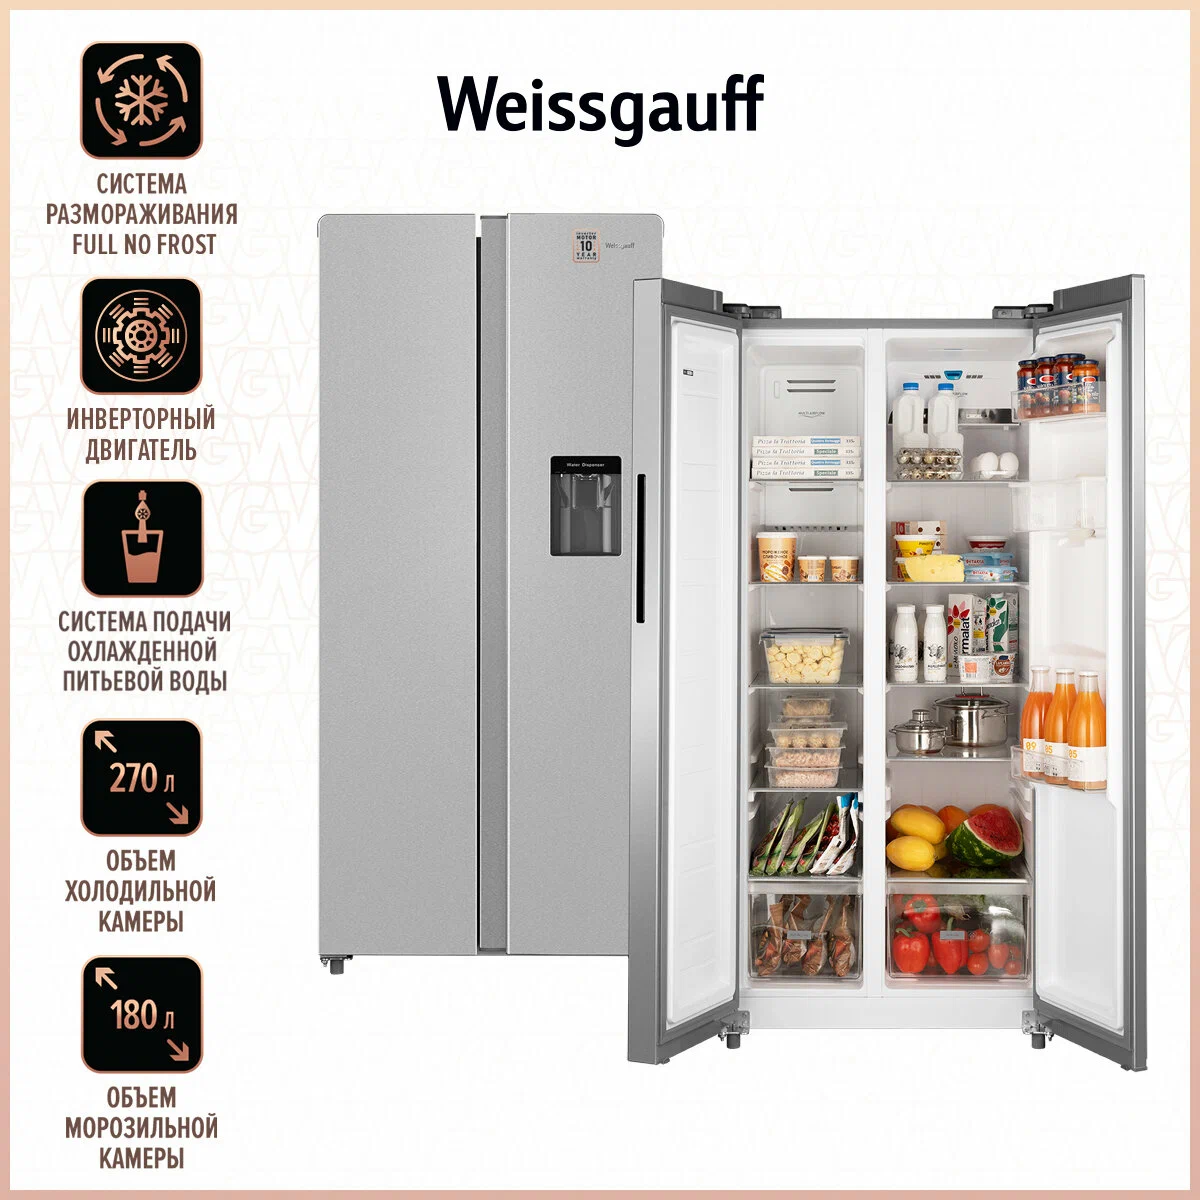 Холодильник Weissgauff WSBS 600 X серебристый холодильник weissgauff wsbs 600 xb